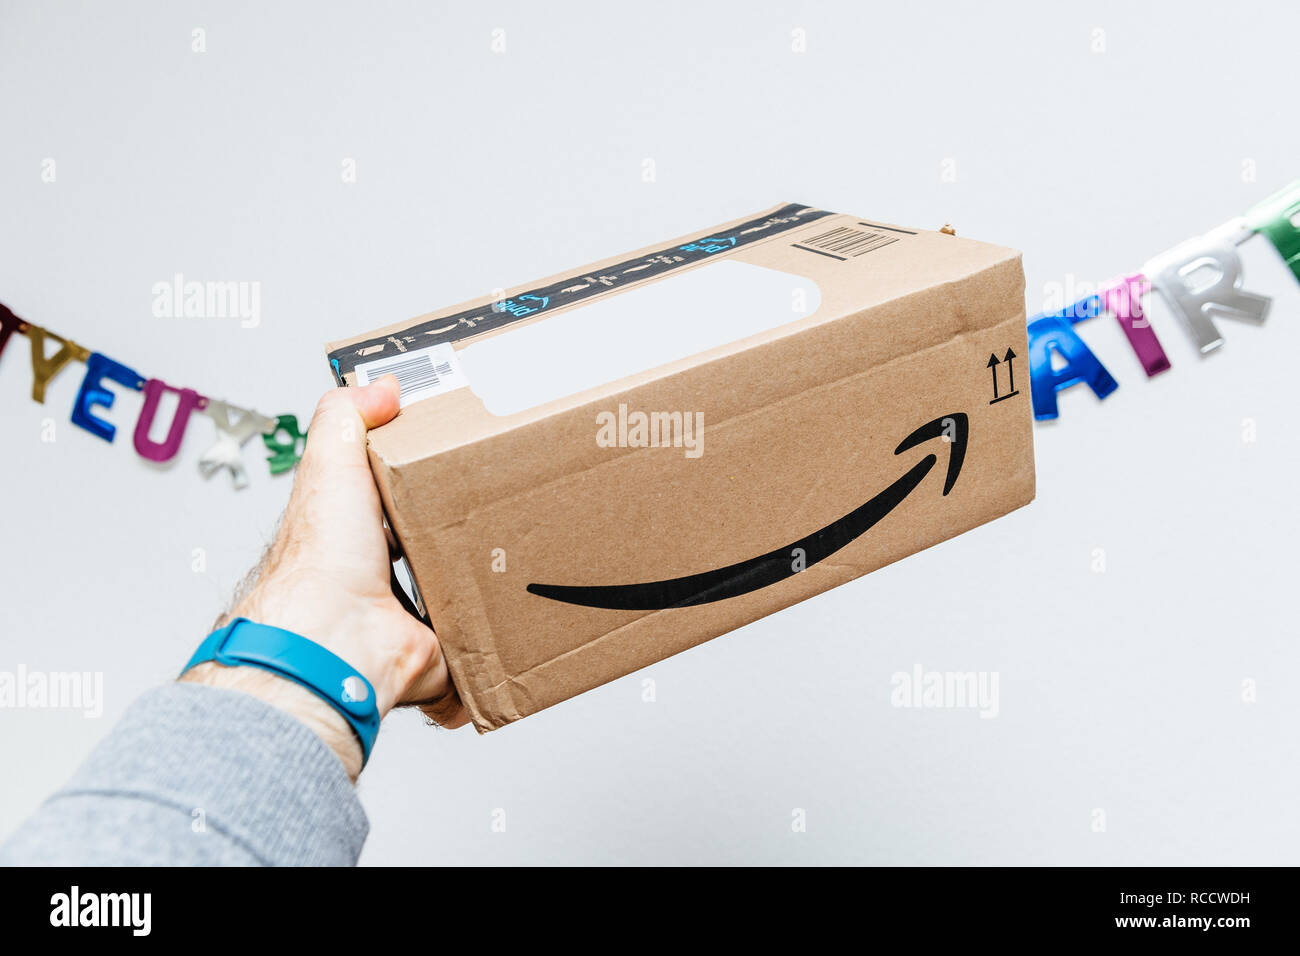 PARIS, Frankreich - Jan 6, 2018: Amazon Karton Paket Box mit Lächeln Pfeil  Schriftzug gegen Joyeux Anniversaire text Happy Birthday Party  Stockfotografie - Alamy